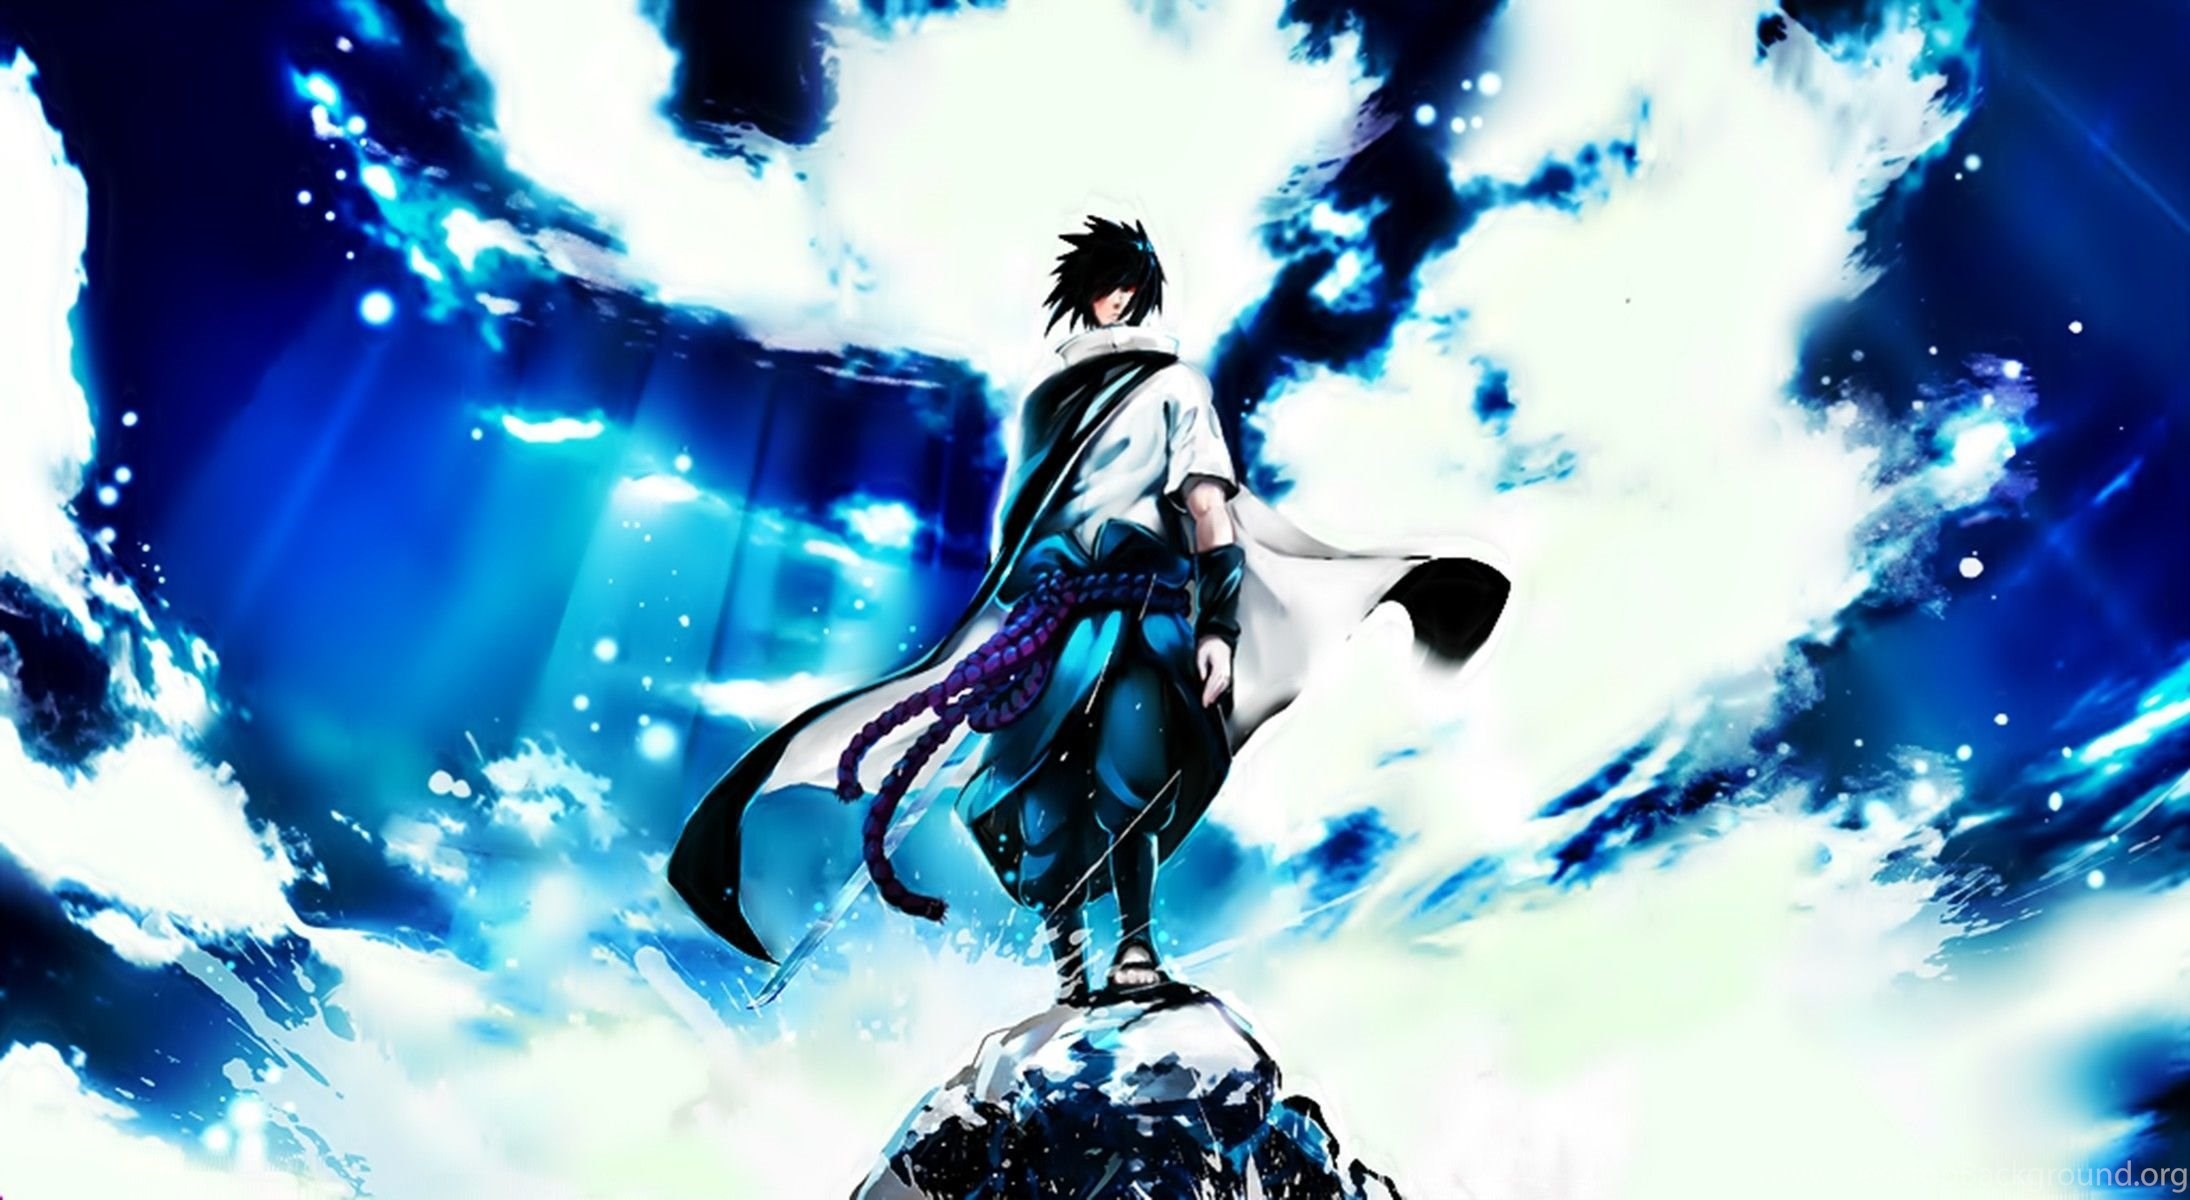 sasuke wallpaper hd,fictional character,cg artwork,anime,sky,graphic design